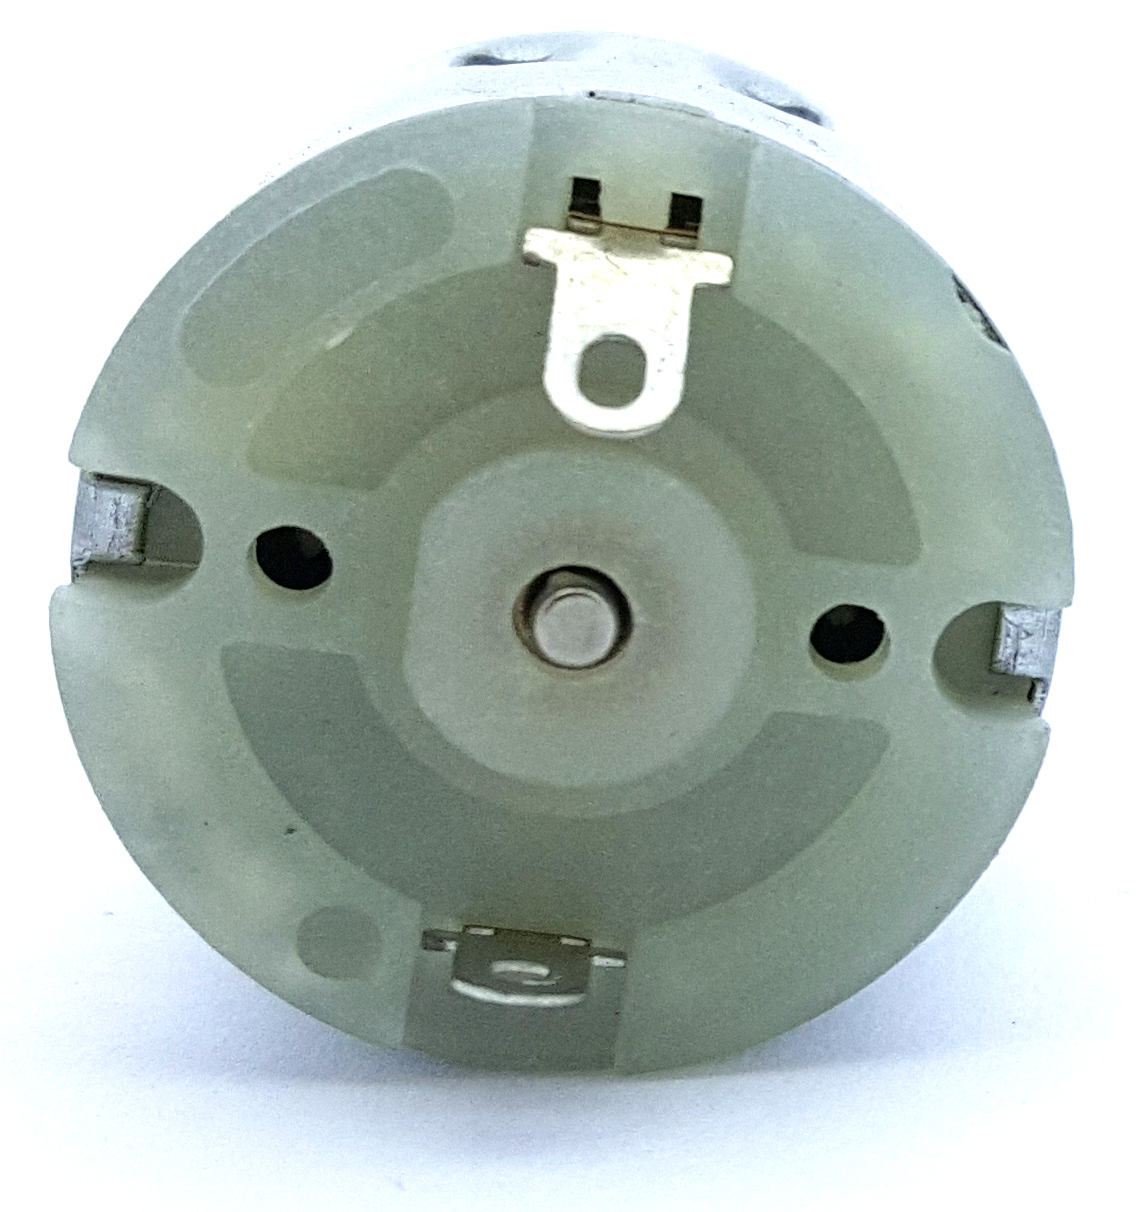 Small Round Electric Motor 1.5V - 3V DC